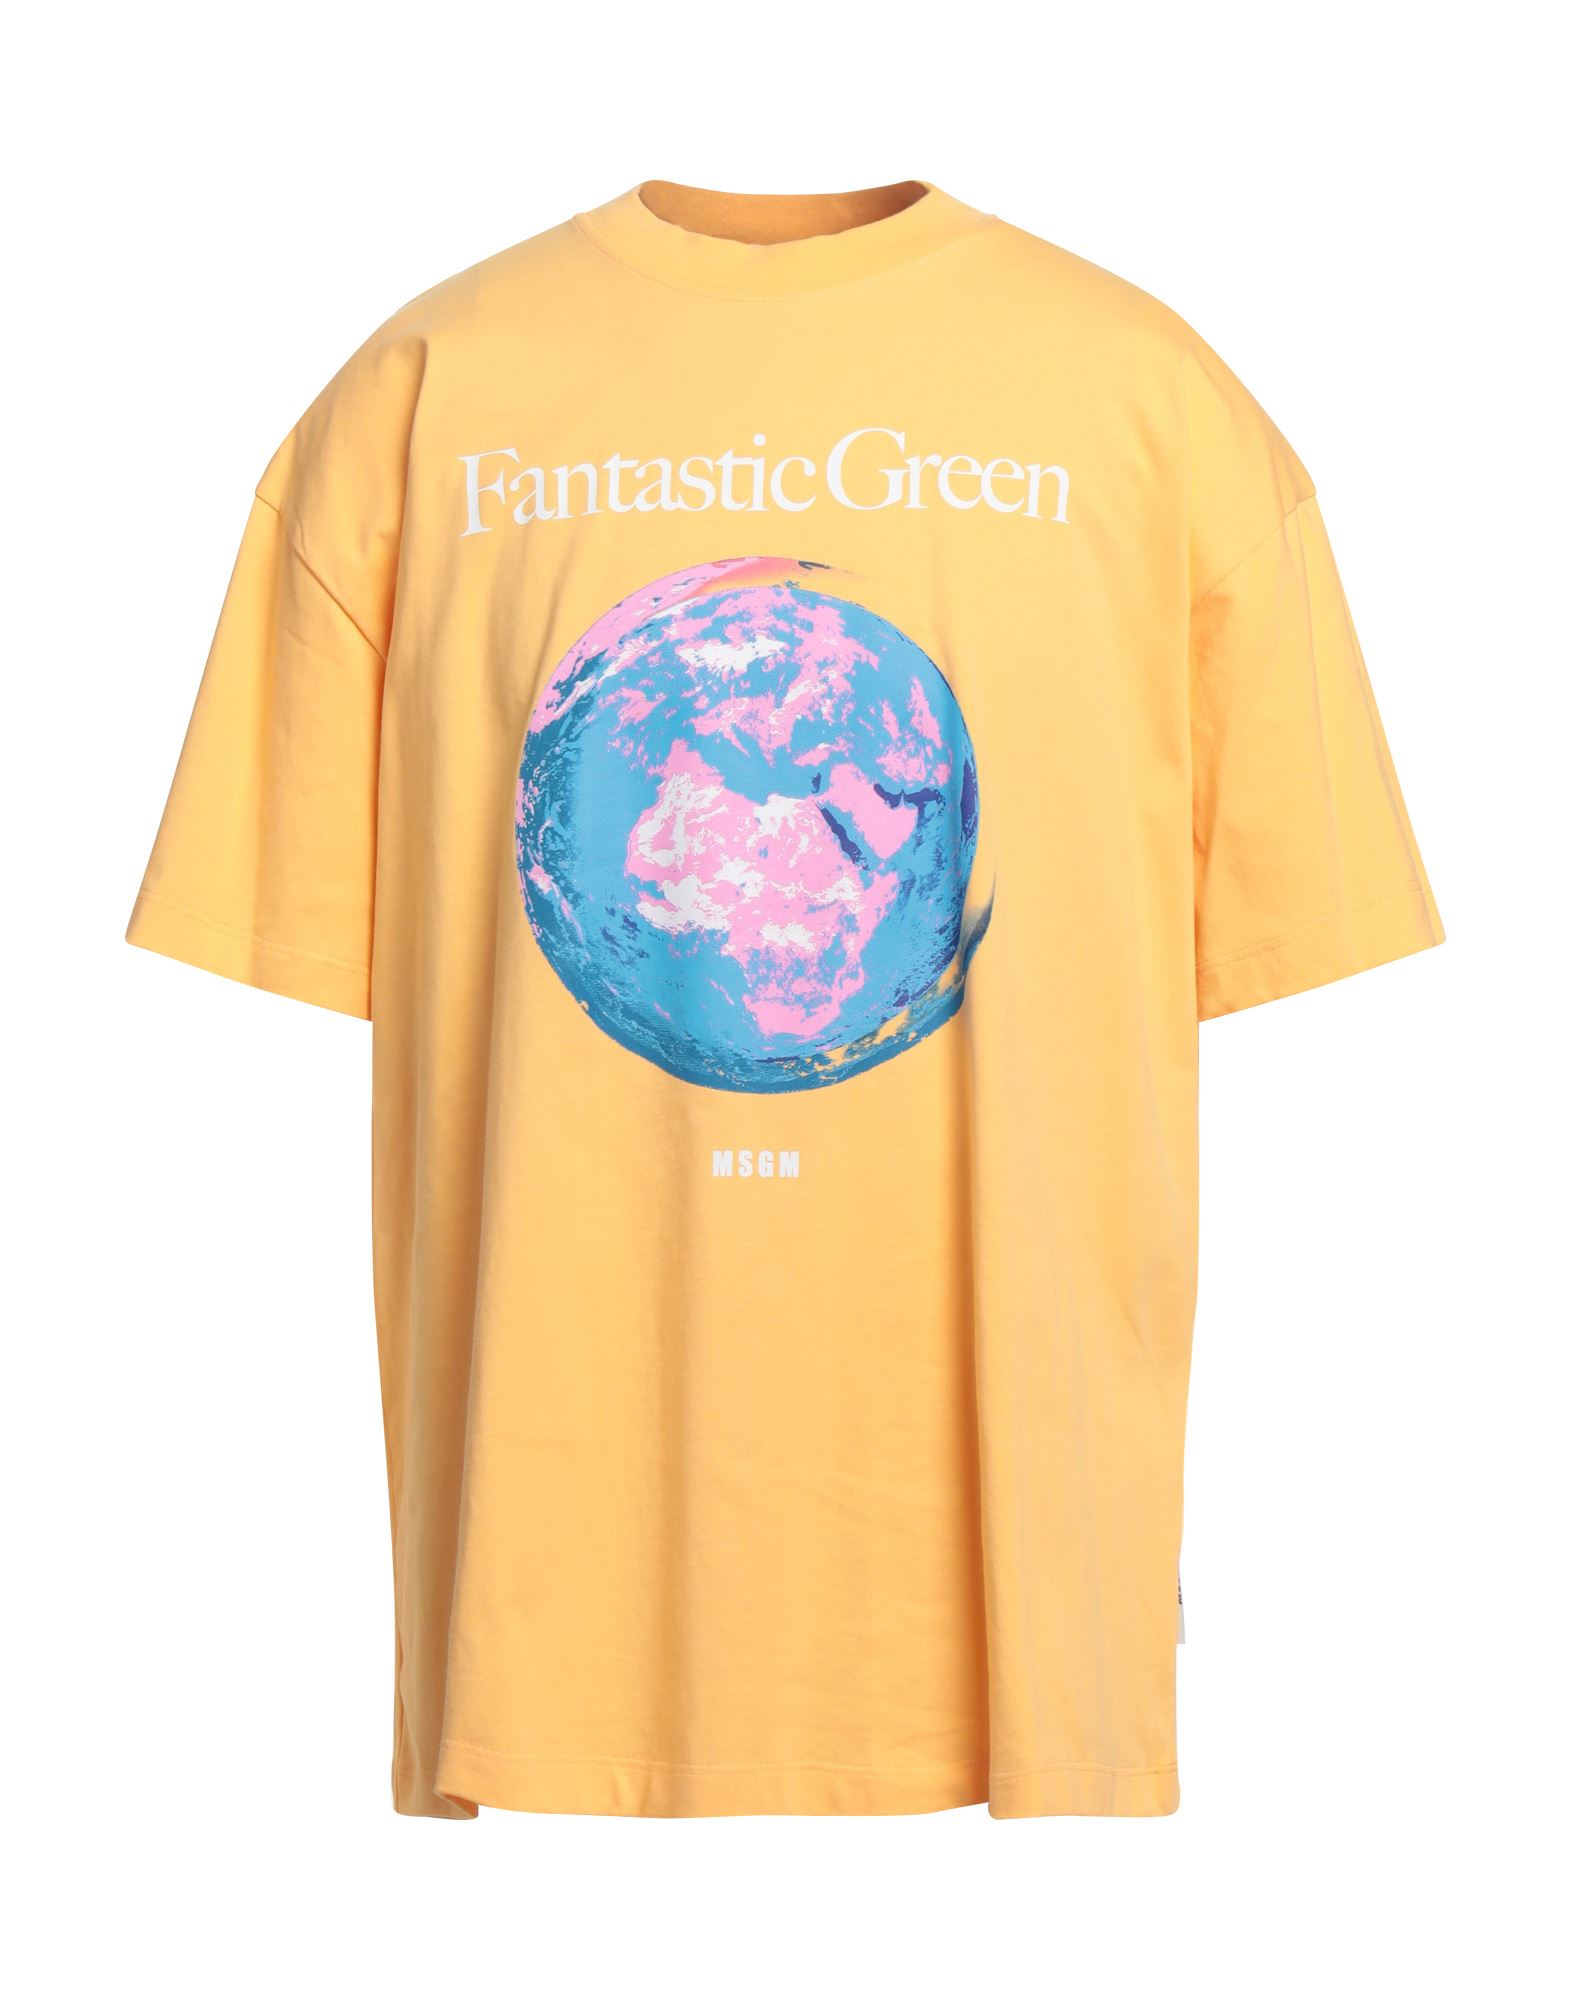 Msgm T-shirts In Orange